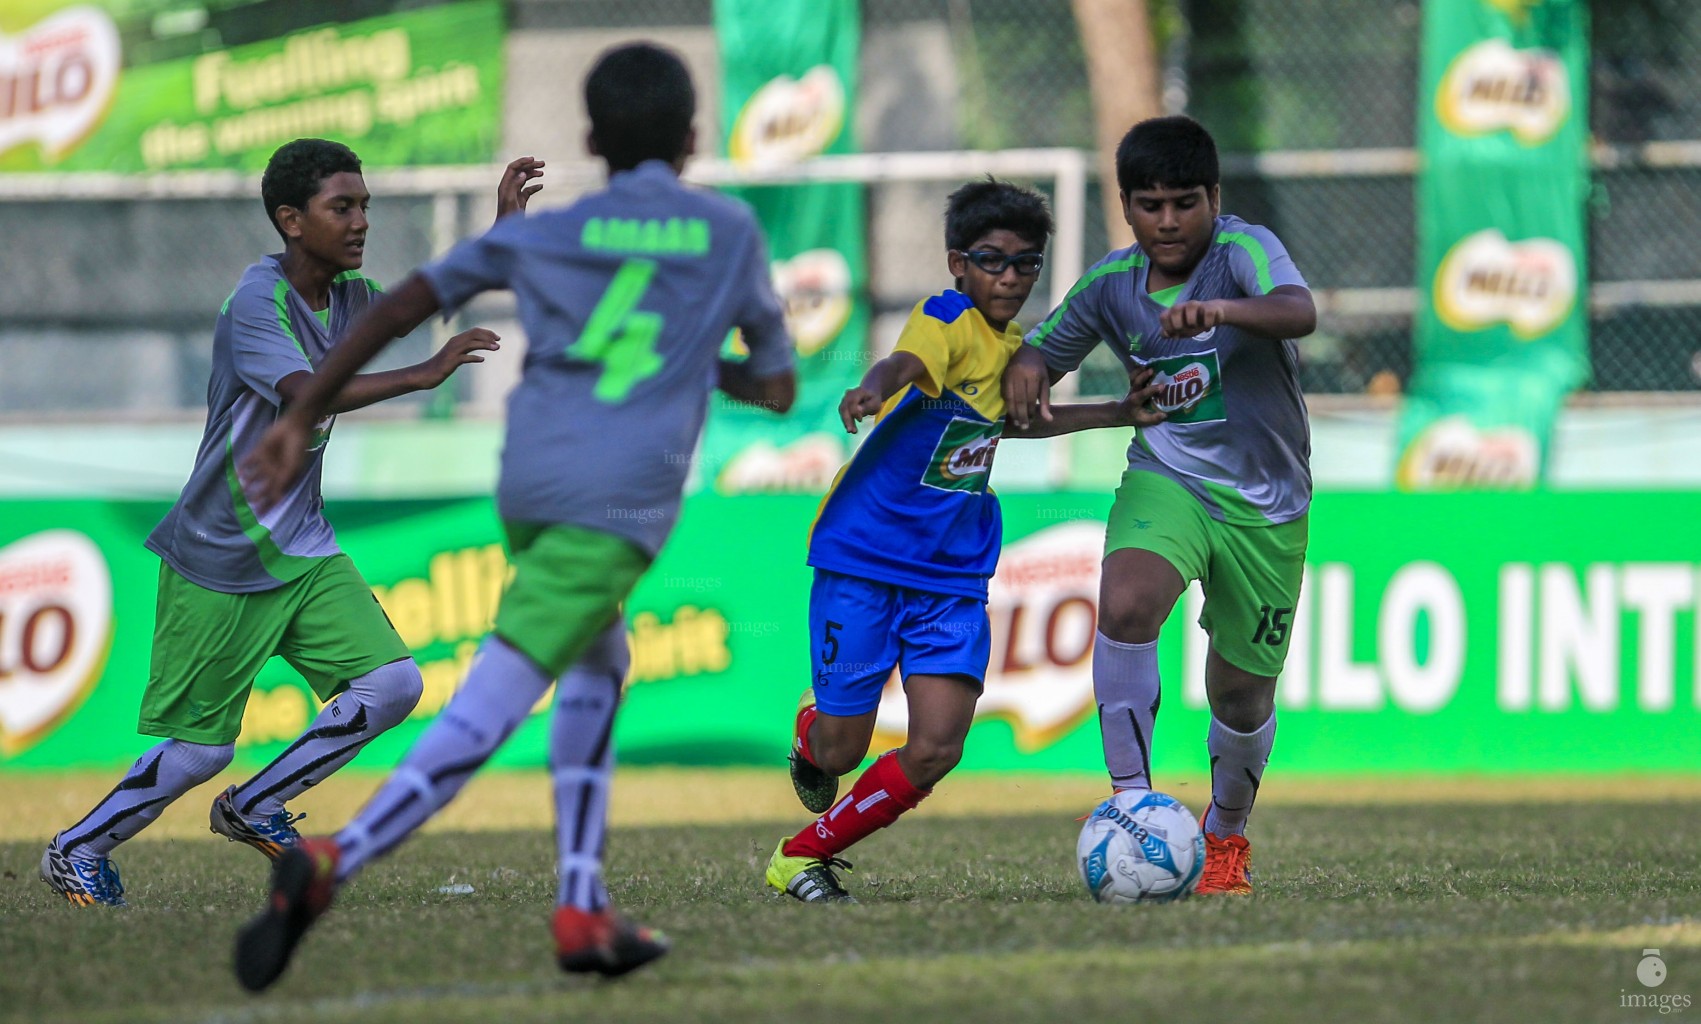 Billabong High  vs Ahmadhiyya School in Milo Interschool Football Tournament Under 14 category Thursday, March 17, 2016. (Images.mv Photo: Mohamed Ahsan)